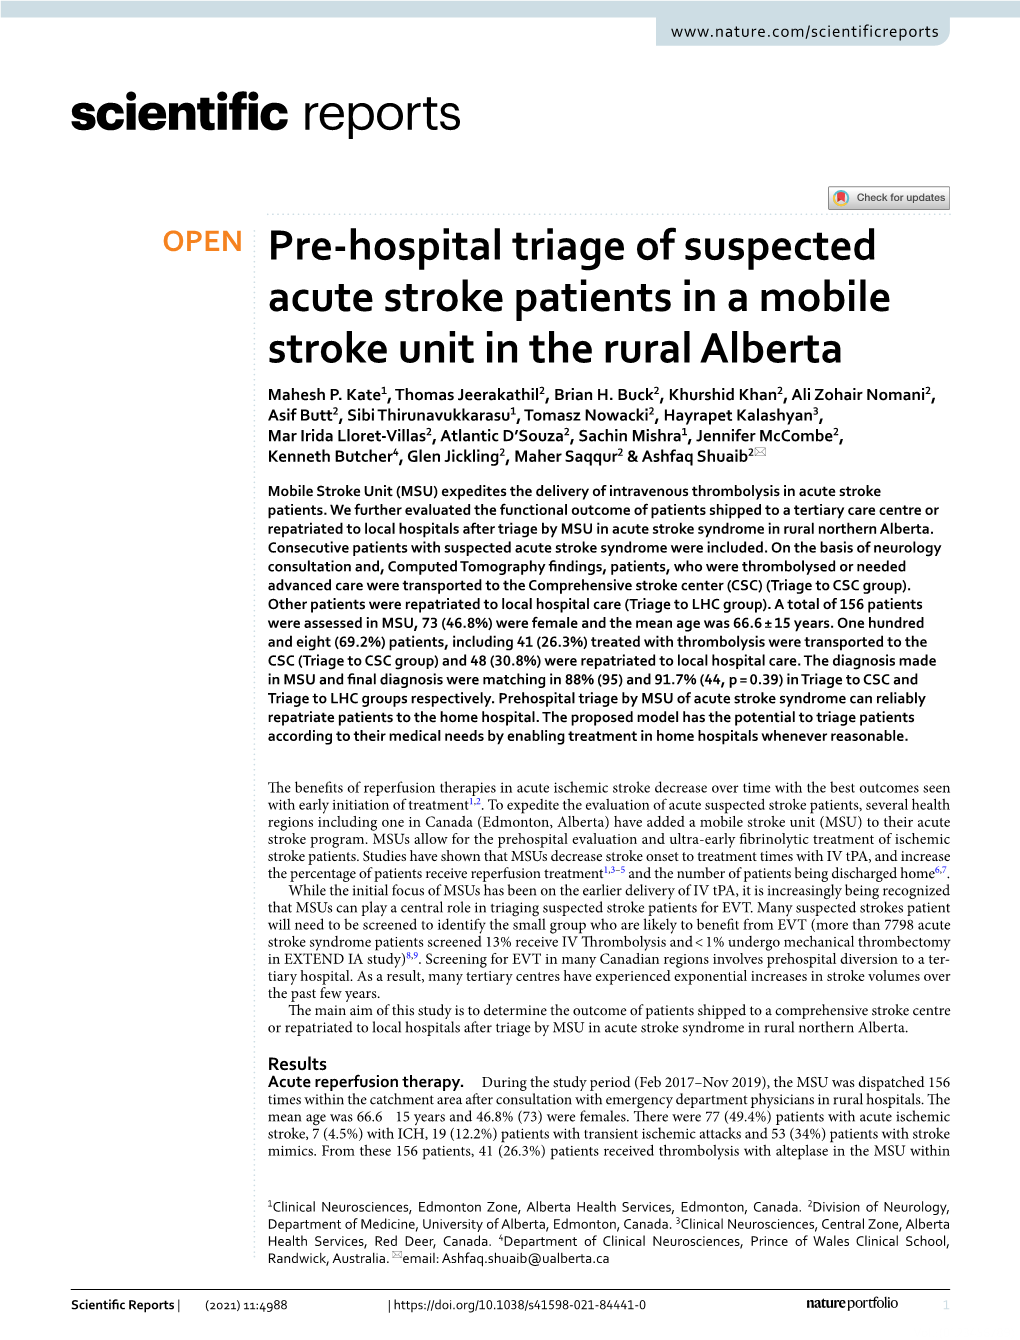 Pre-Hospital Triage of Suspected Acute Stroke Patients in a Mobile Stroke